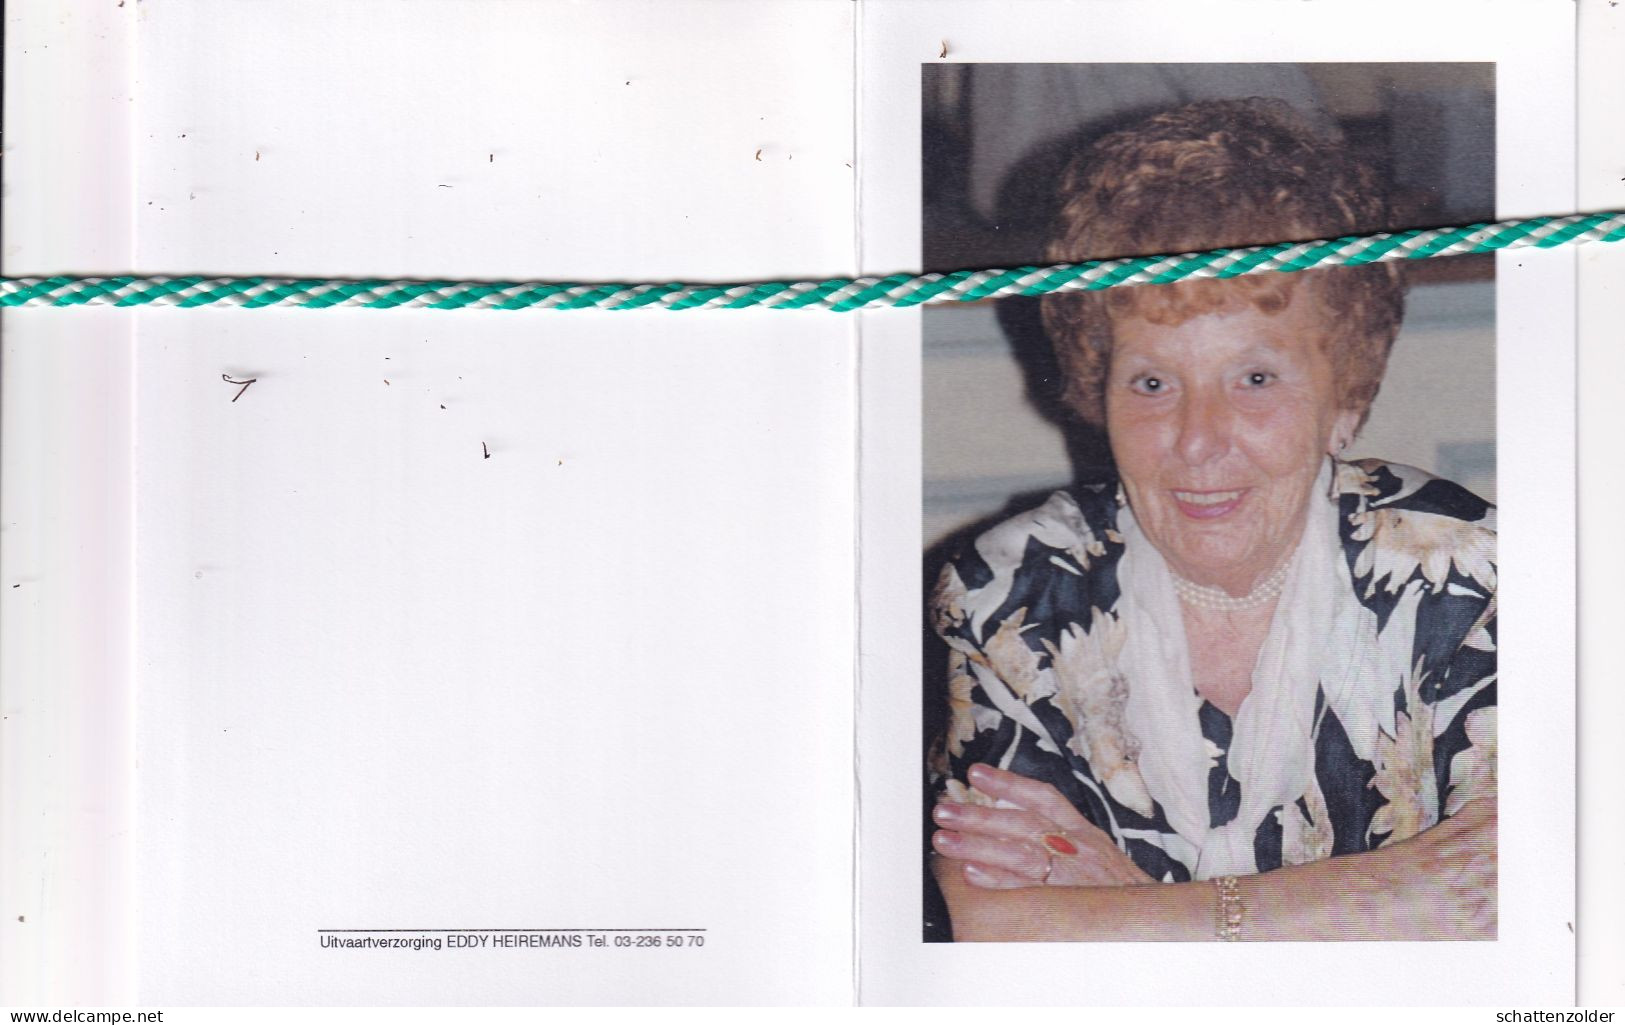 Anna Goor-Witz, Wommelgem 1928, Borsbeek 2003. Foto - Obituary Notices